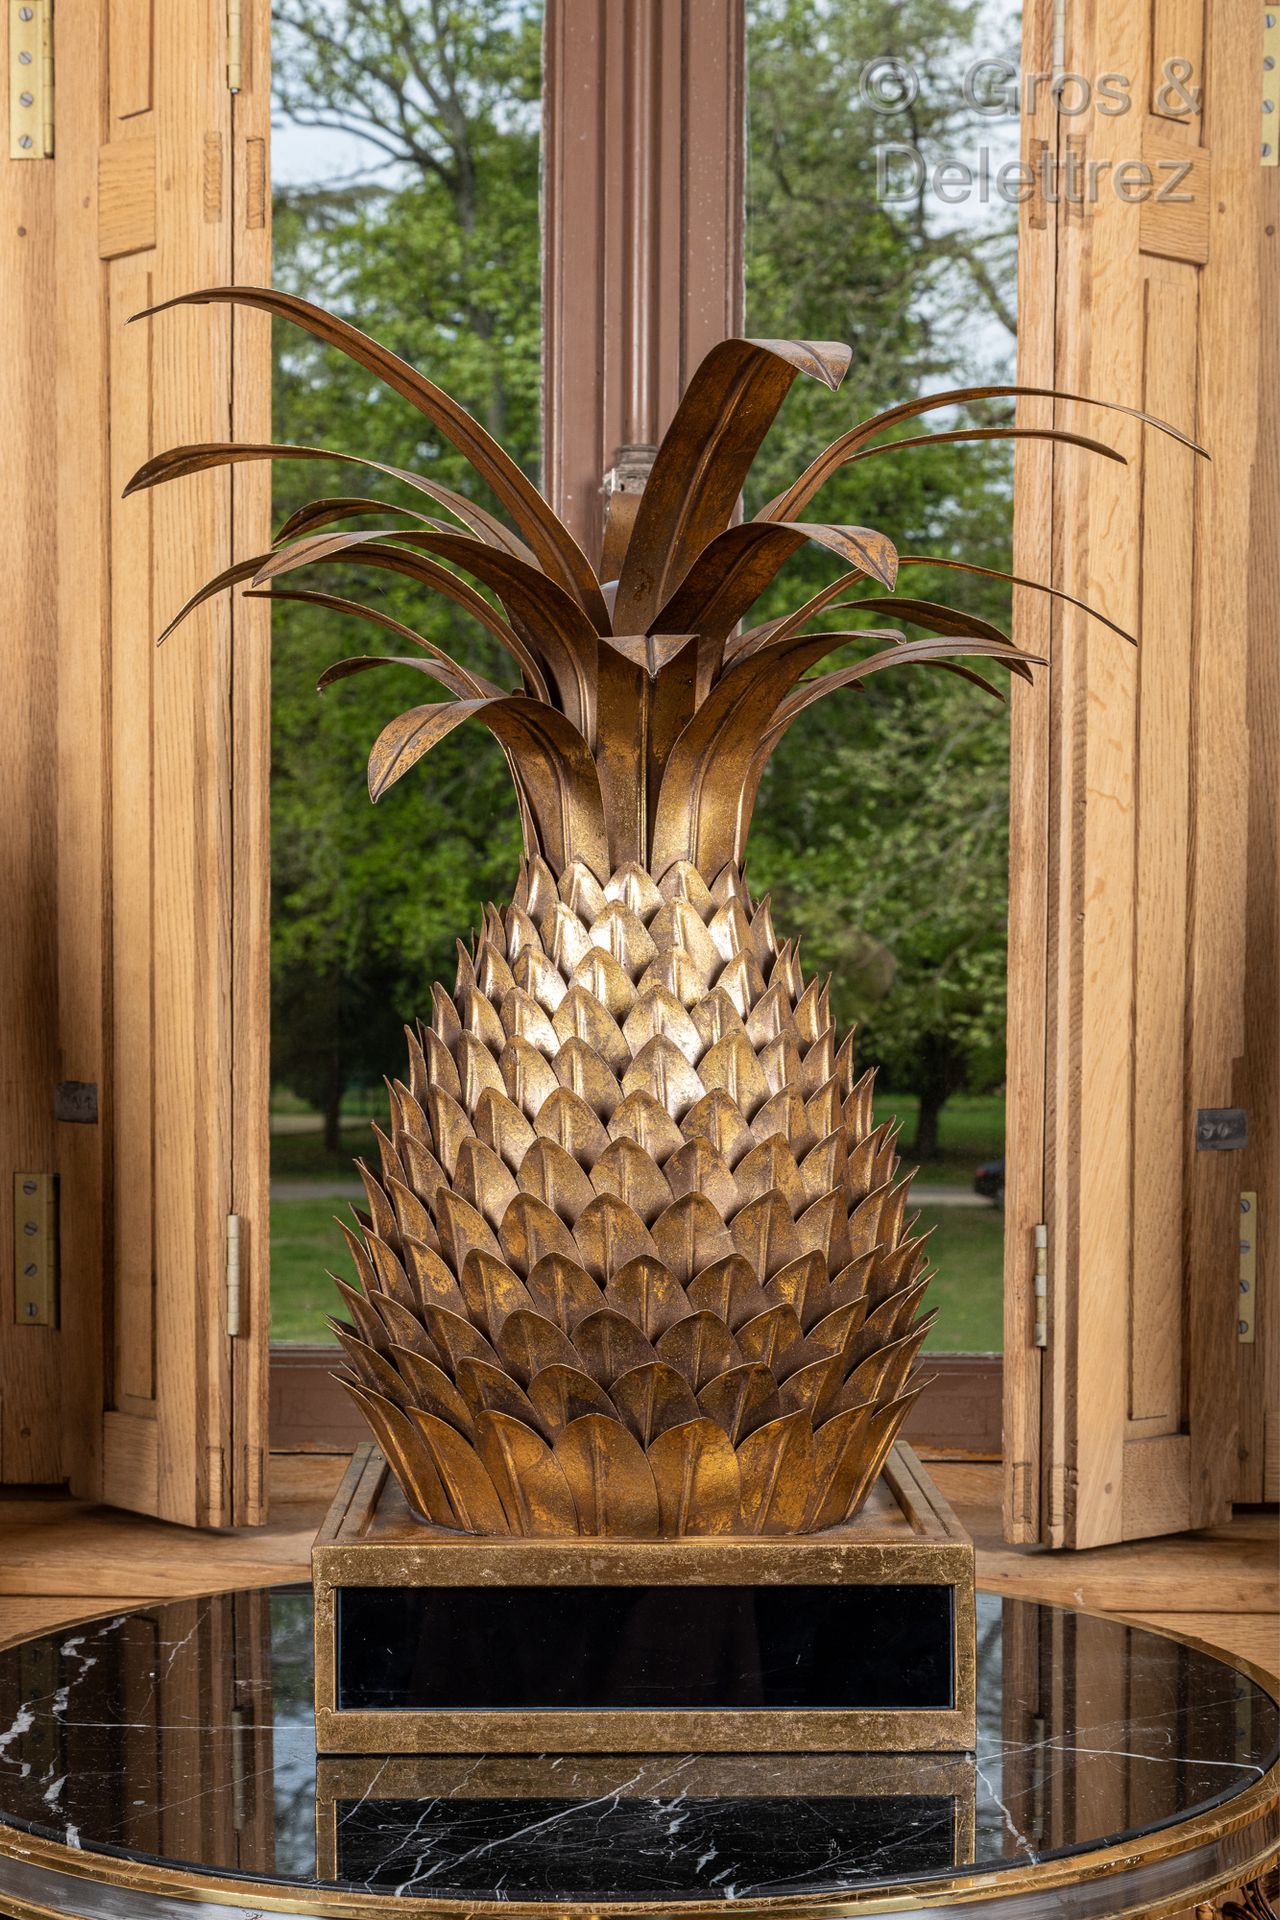 Dans le goût de la Maison JANSEN 表现棕榈树的黄铜落地灯，放置在四角形的底座上

高：68厘米